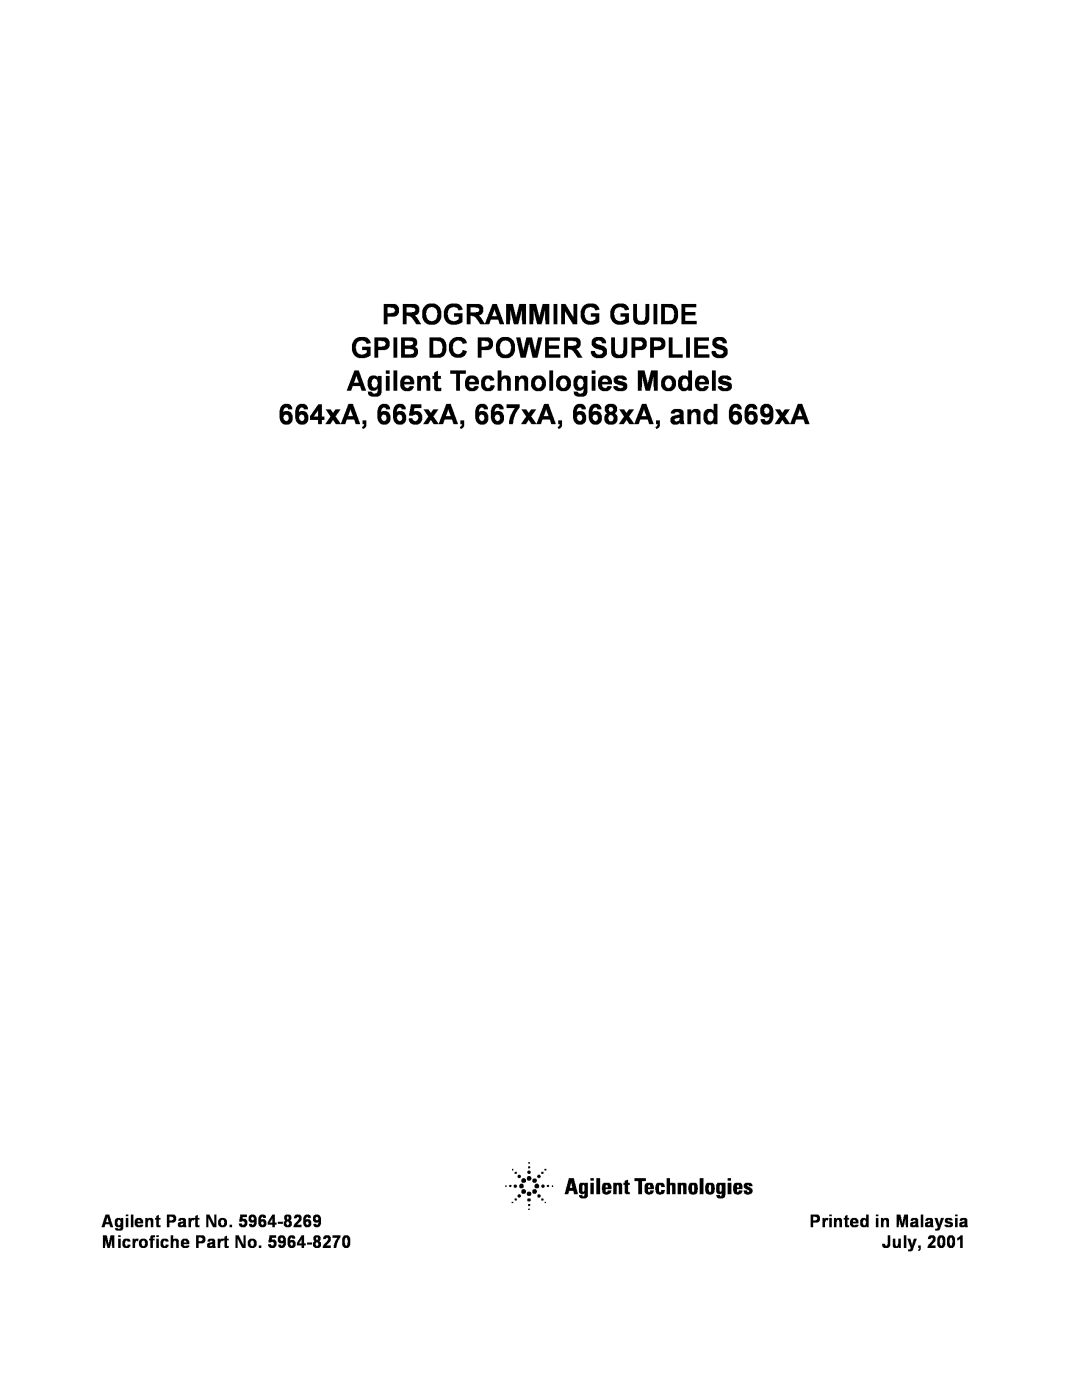 Agilent Technologies 664xA manual Programming Guide Gpib Dc Power Supplies, Agilent Part No, Microfiche Part No, July 